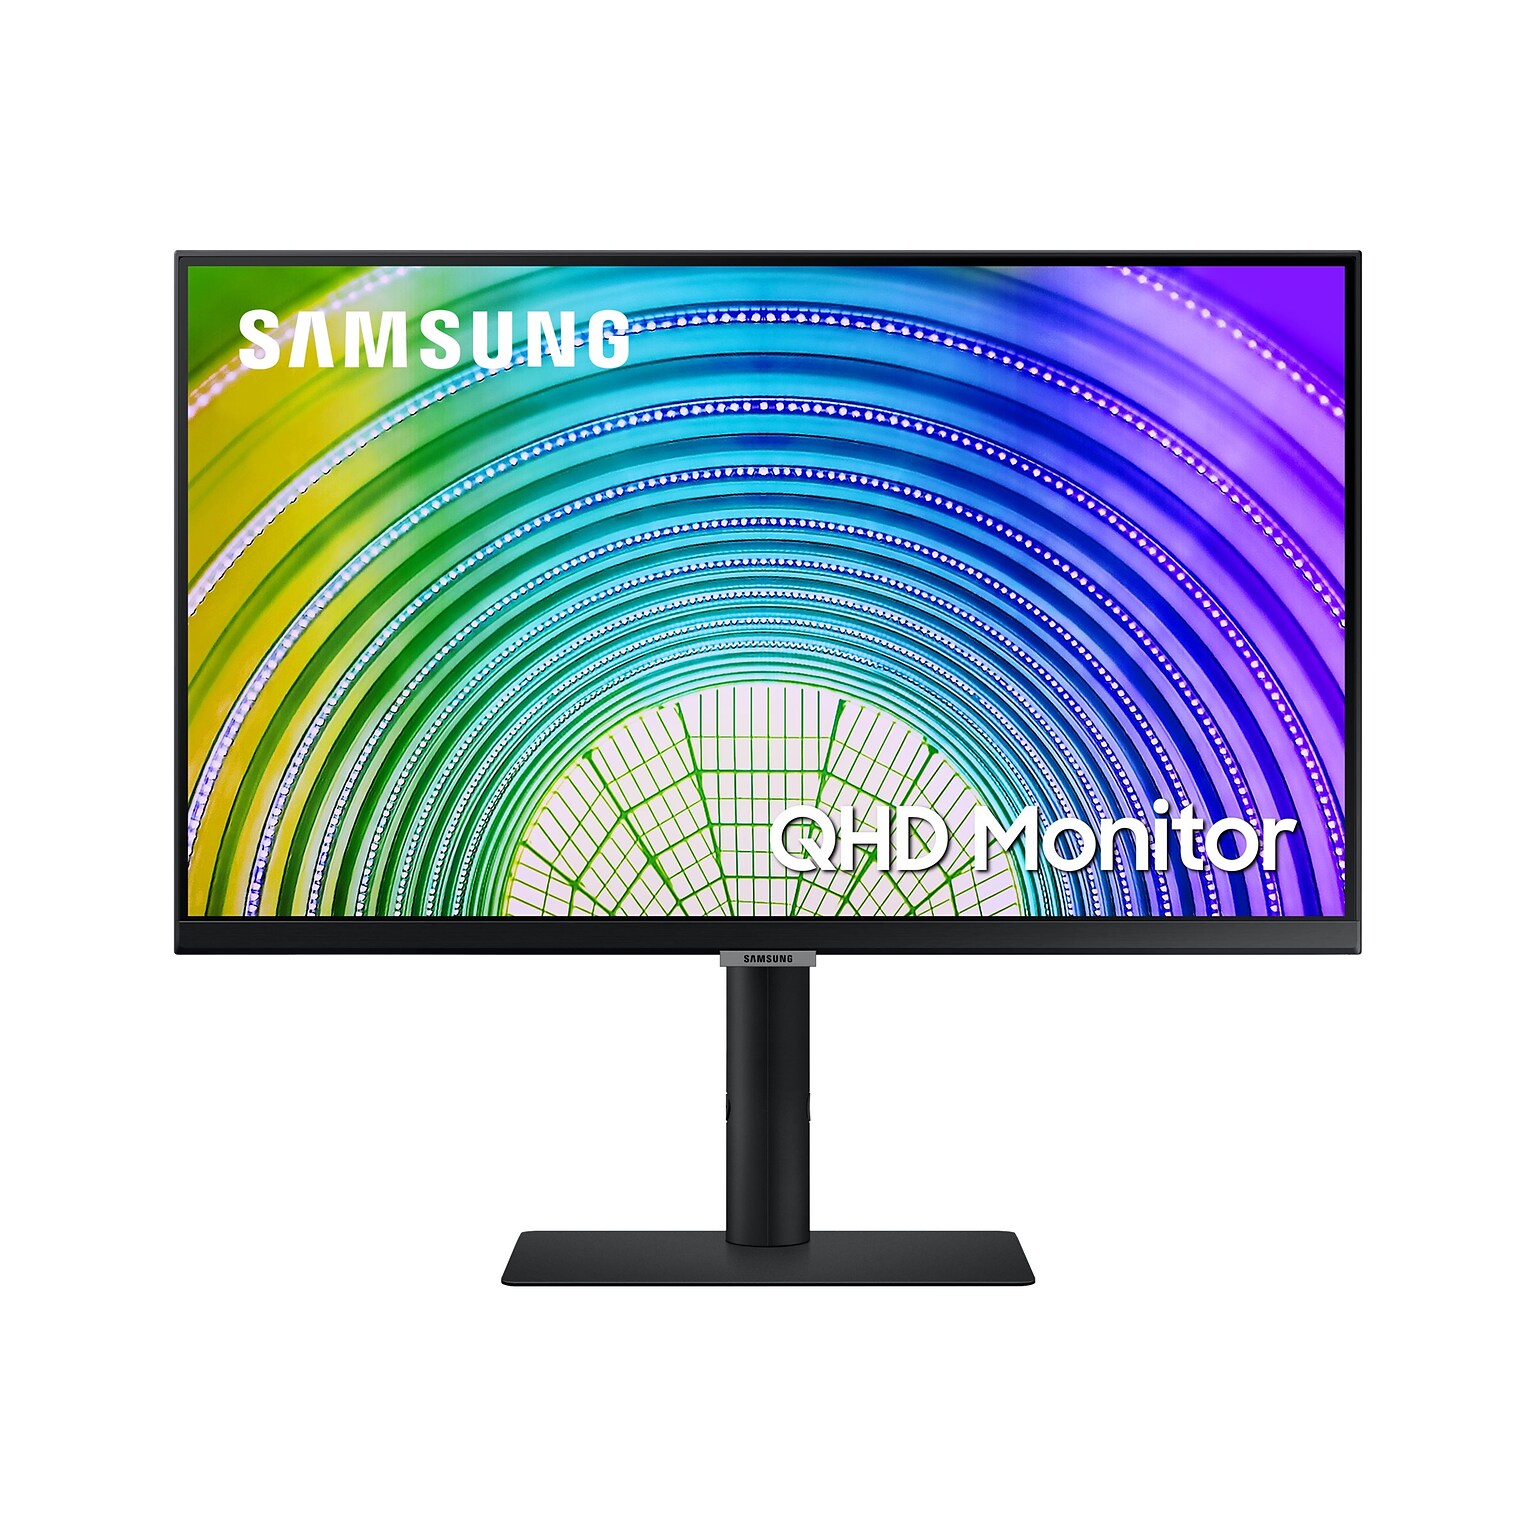 Samsung 24 LED Monitor, Black  (S24A608UCN)